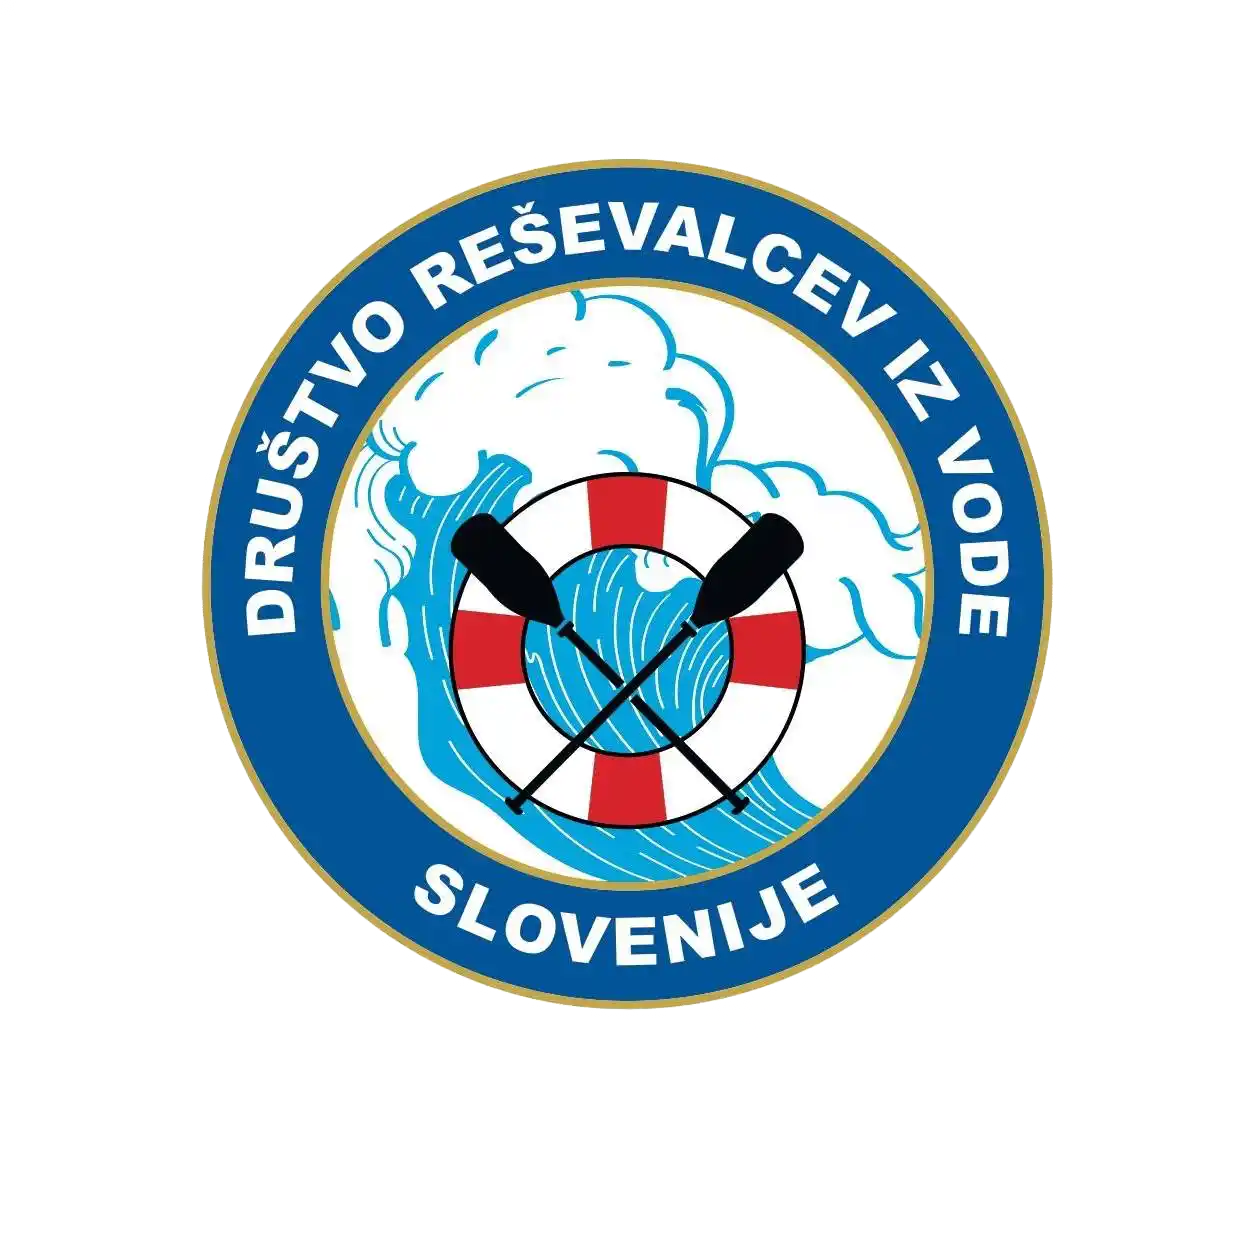 brand logo of rescue 3 slovenia